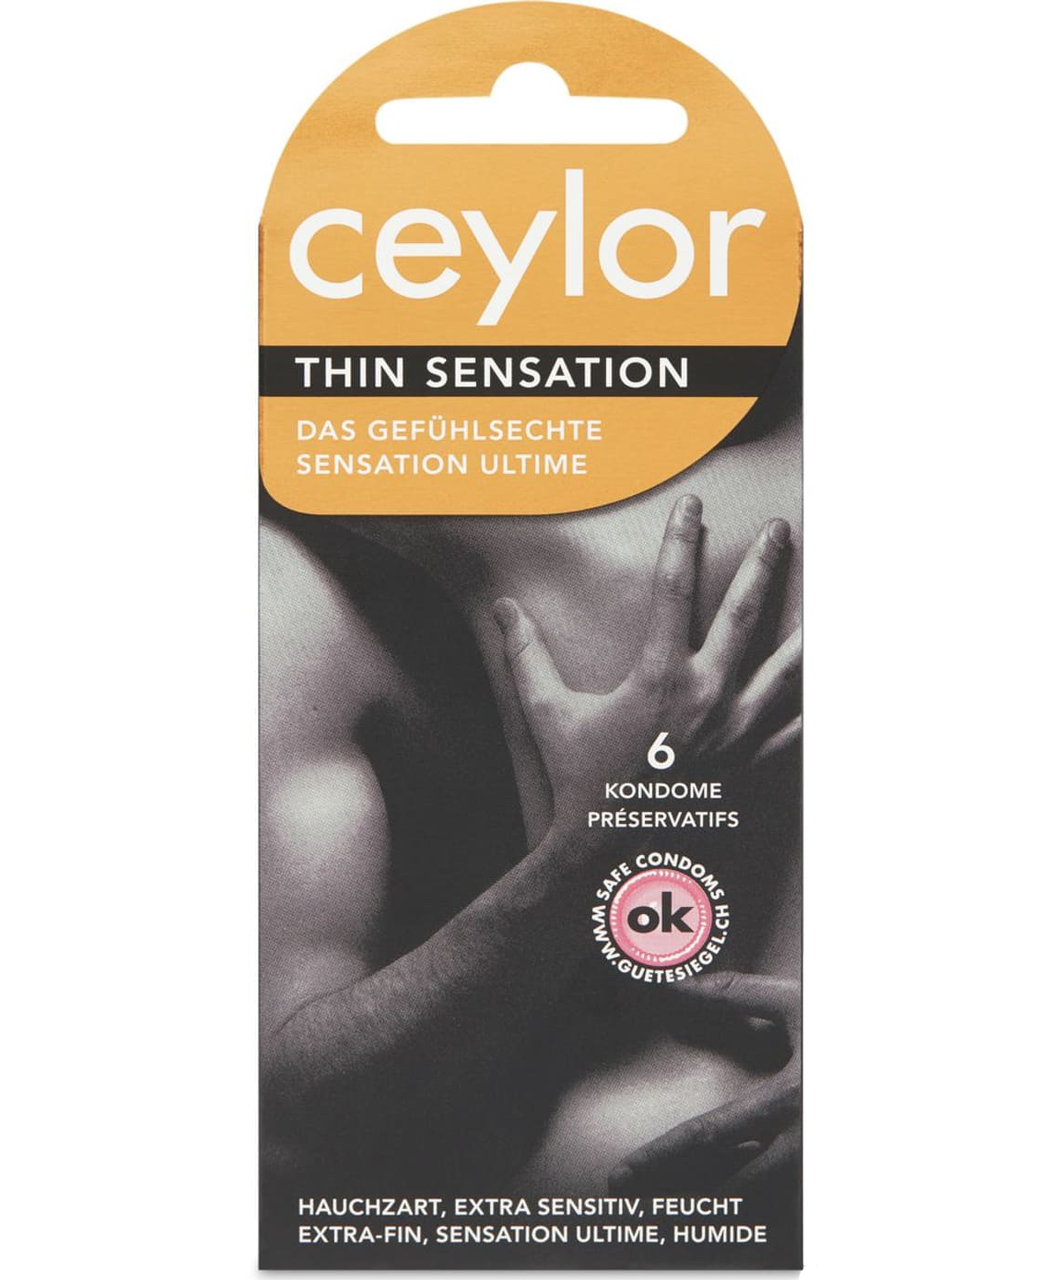 Ceylor Thin Sensation prezervatyvai (6 / 9 vnt.)